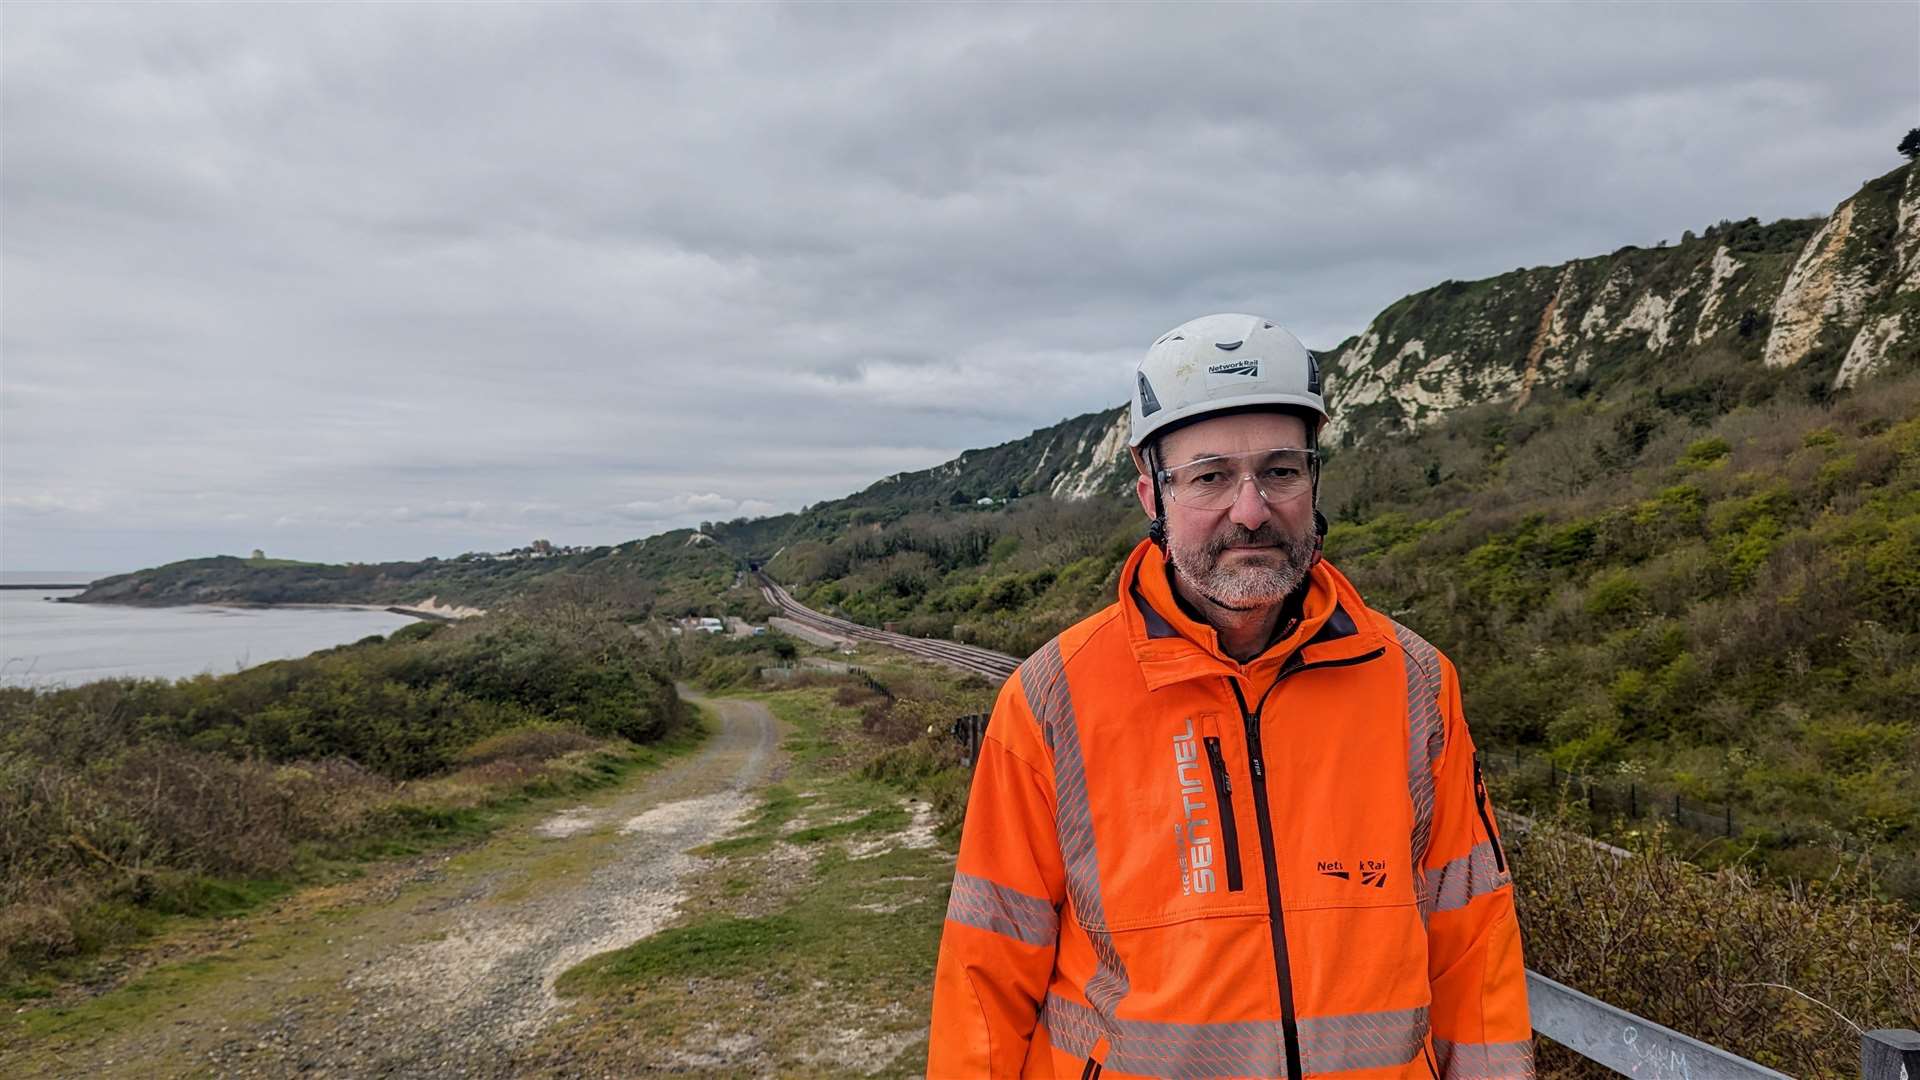 Derek Butcher is a principal geotechnical engineer at Network Rail